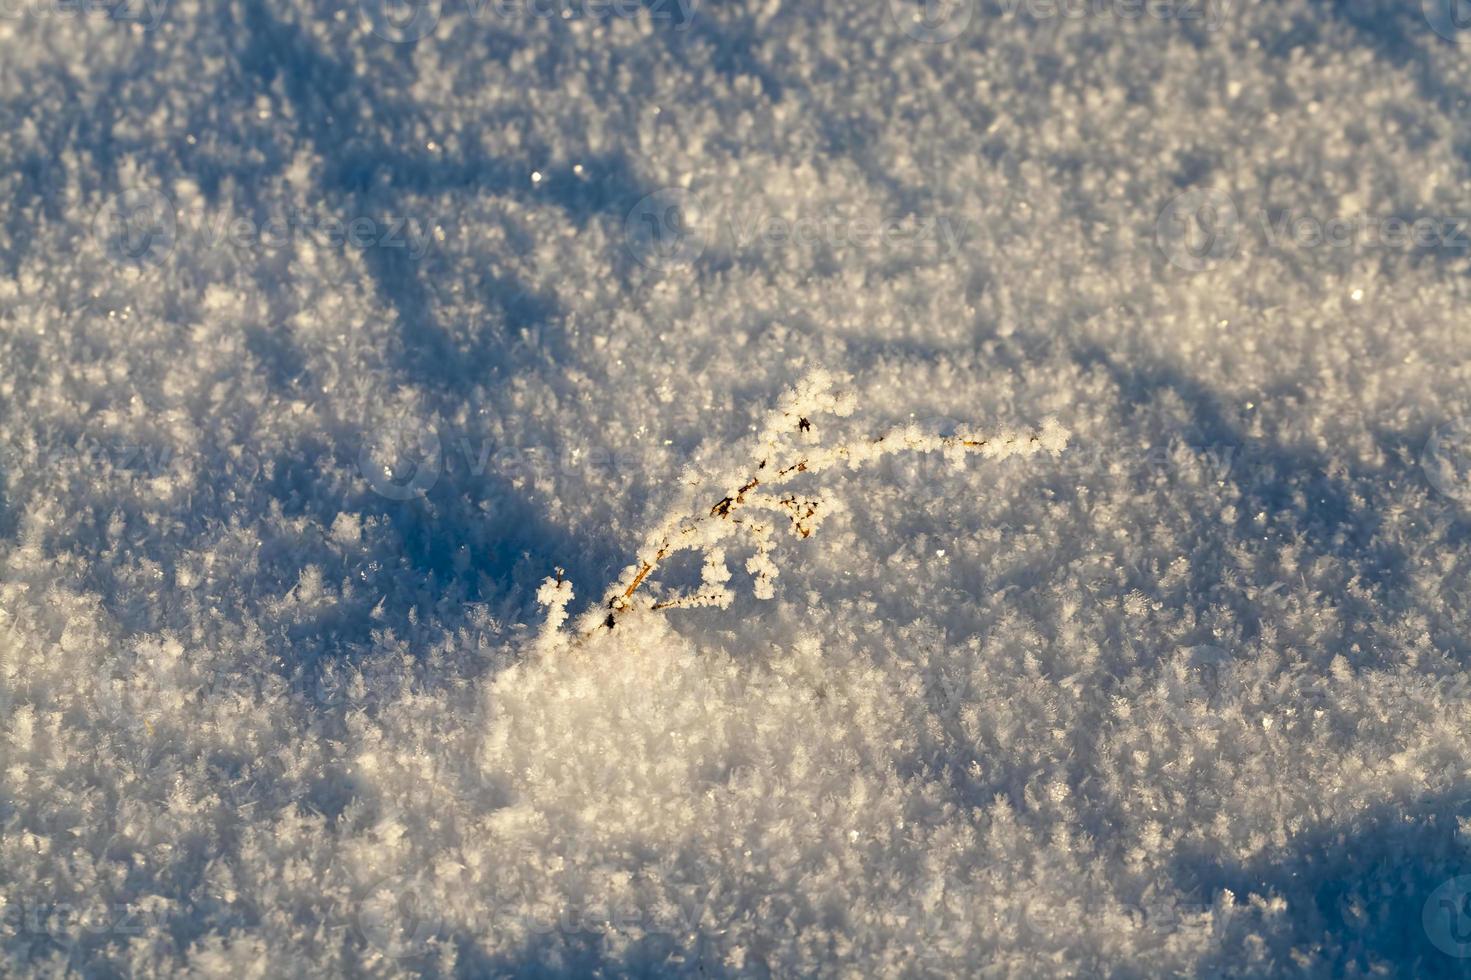 sneeuw bedekt de grond en bomen, plant in de winter foto